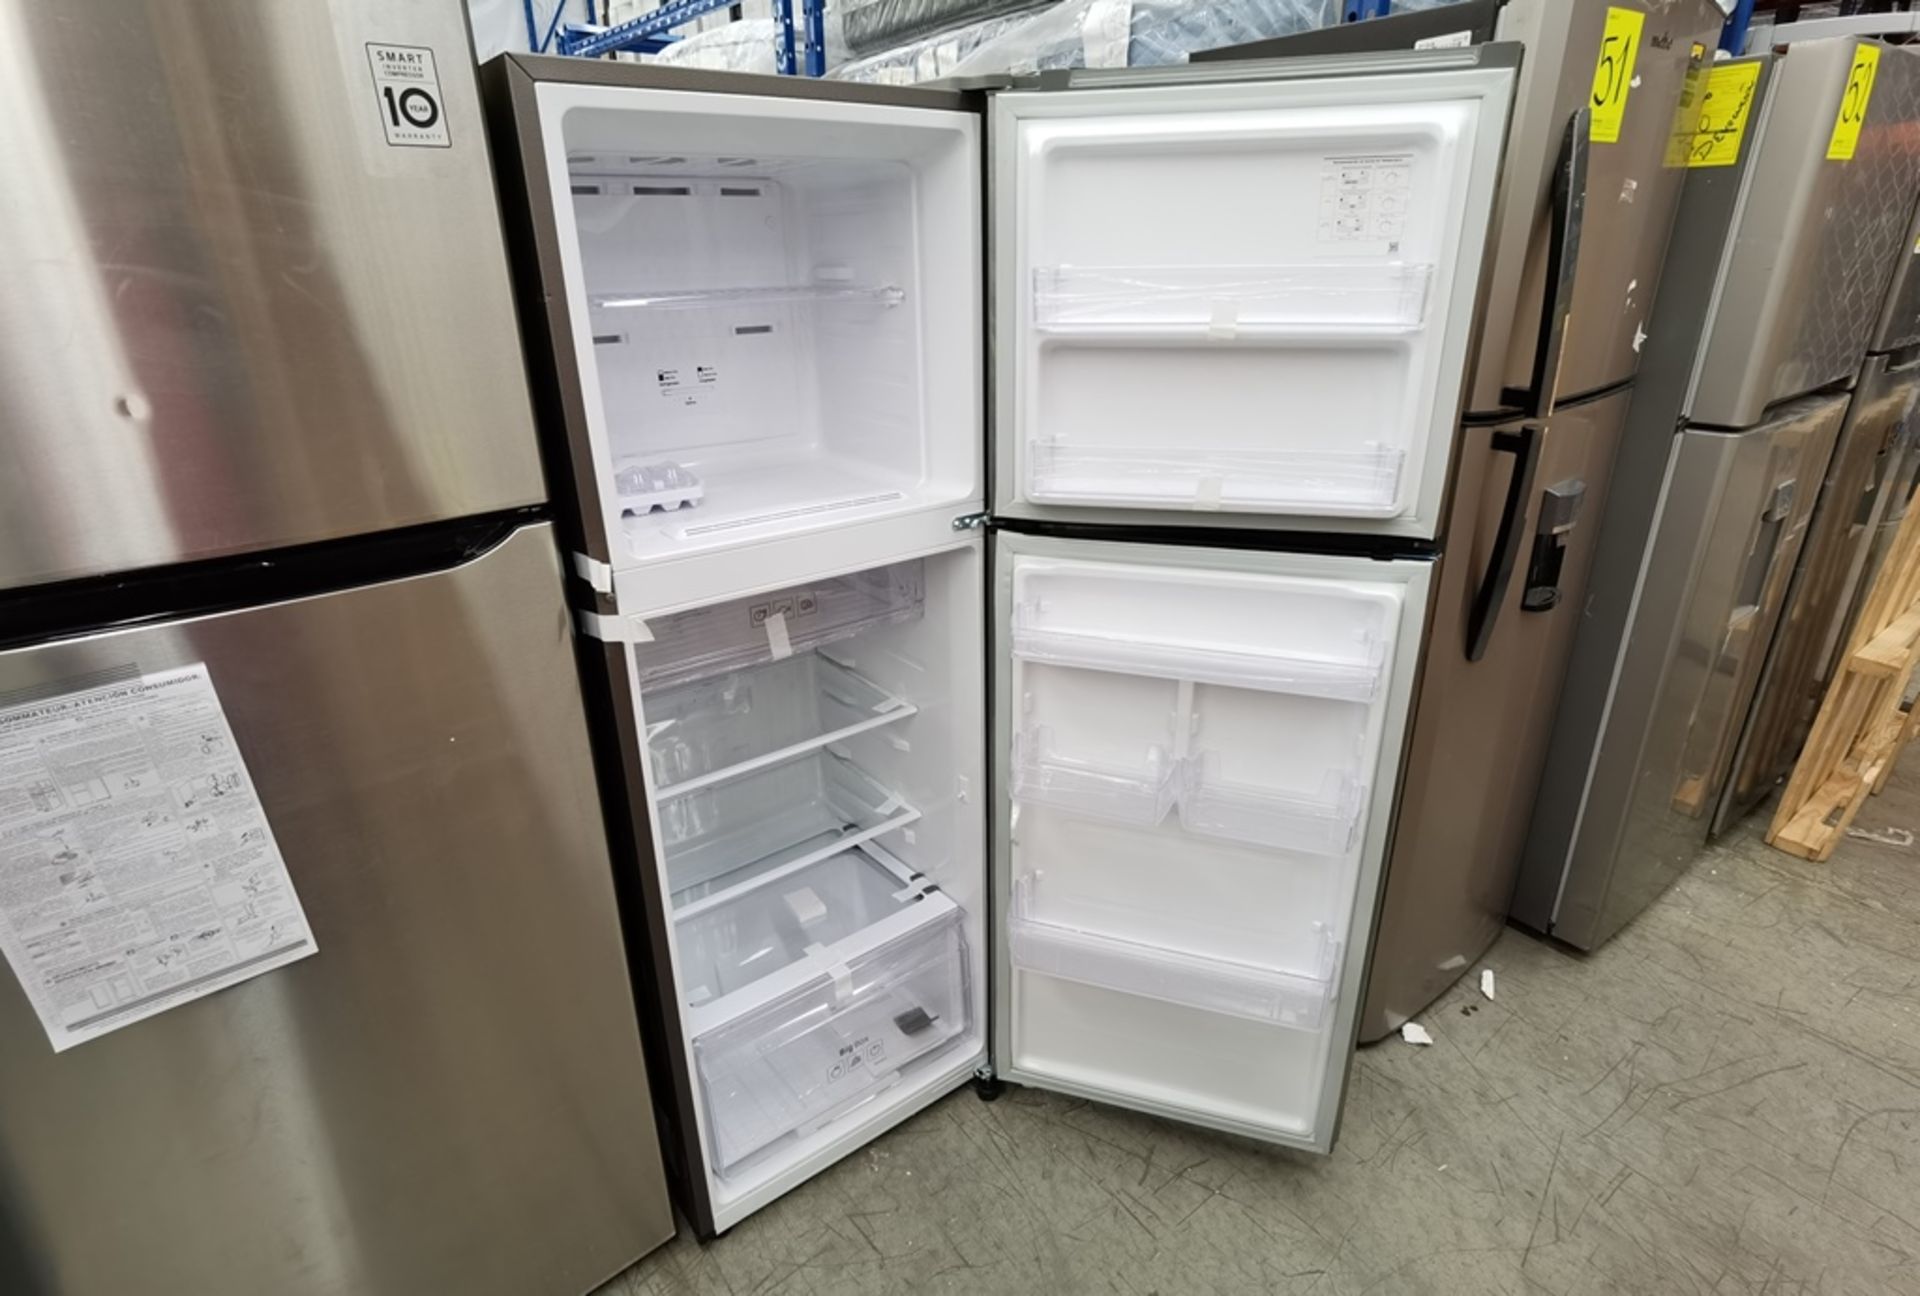 1 Refrigerador Marca Samsung, Modelo RT29A500JS8, Serie 250D, Color Gris, Daños estéticos, LB-4817. - Image 8 of 10